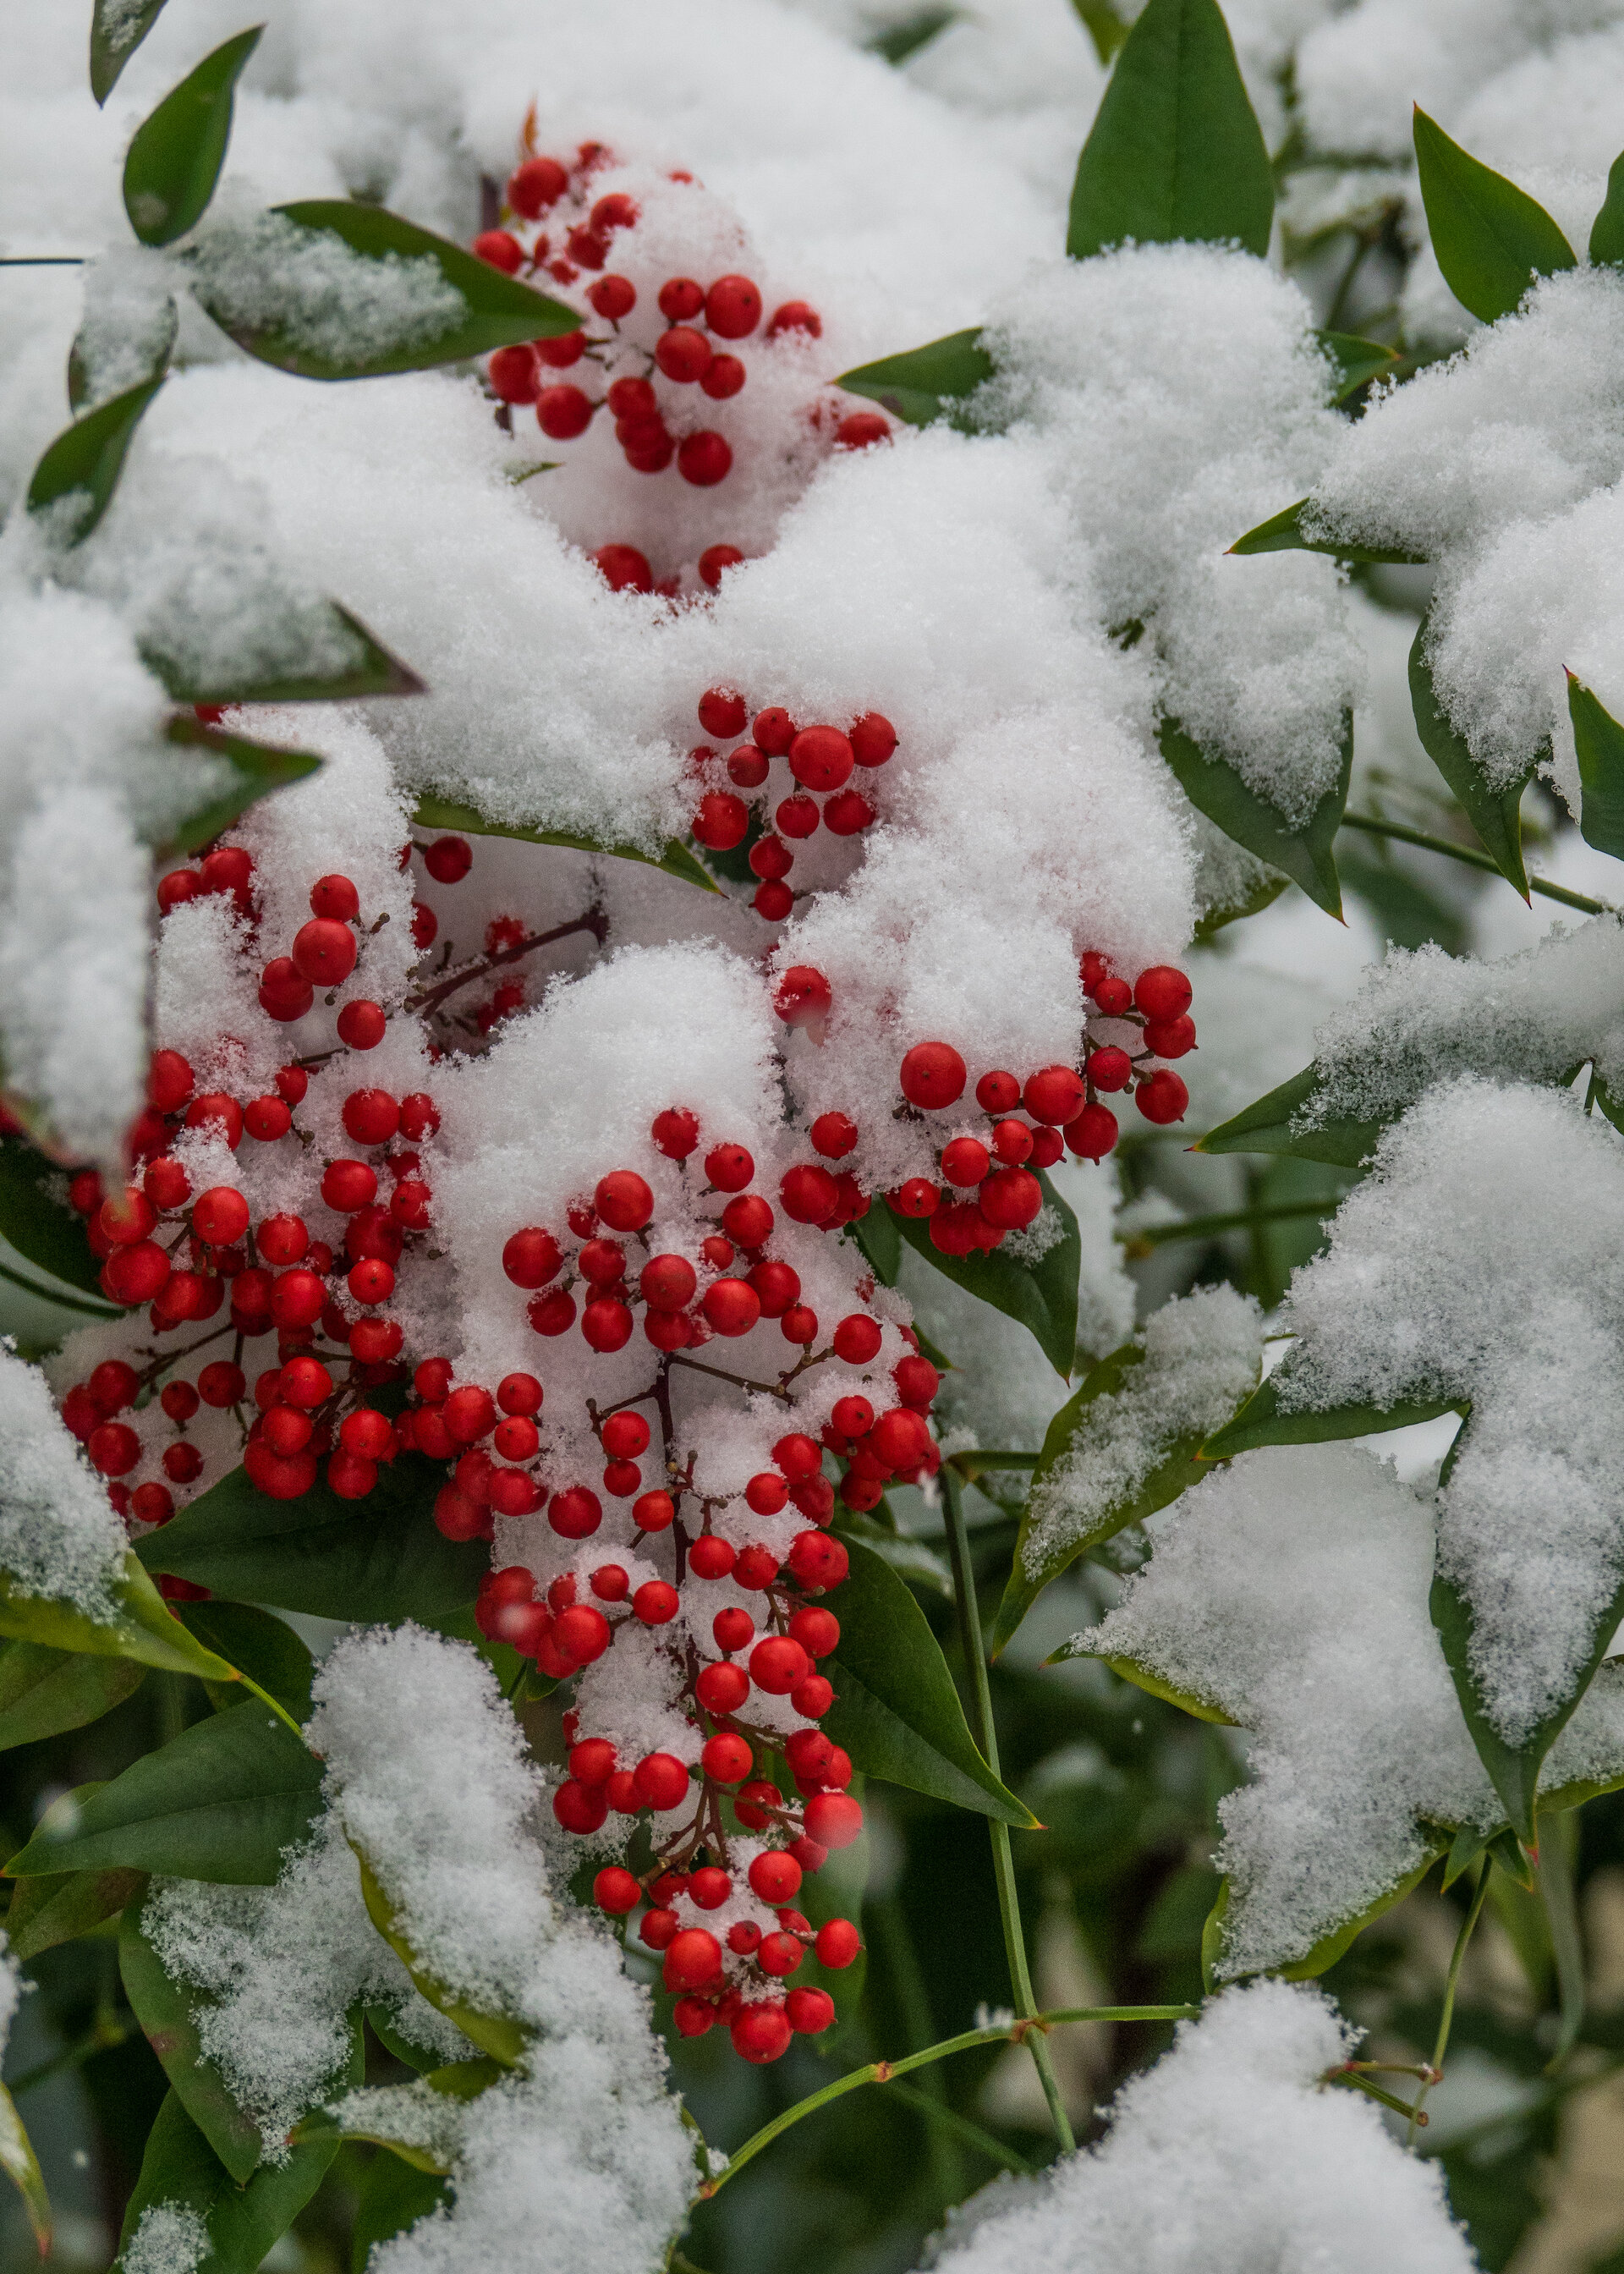  Snow on the berries always looks great 